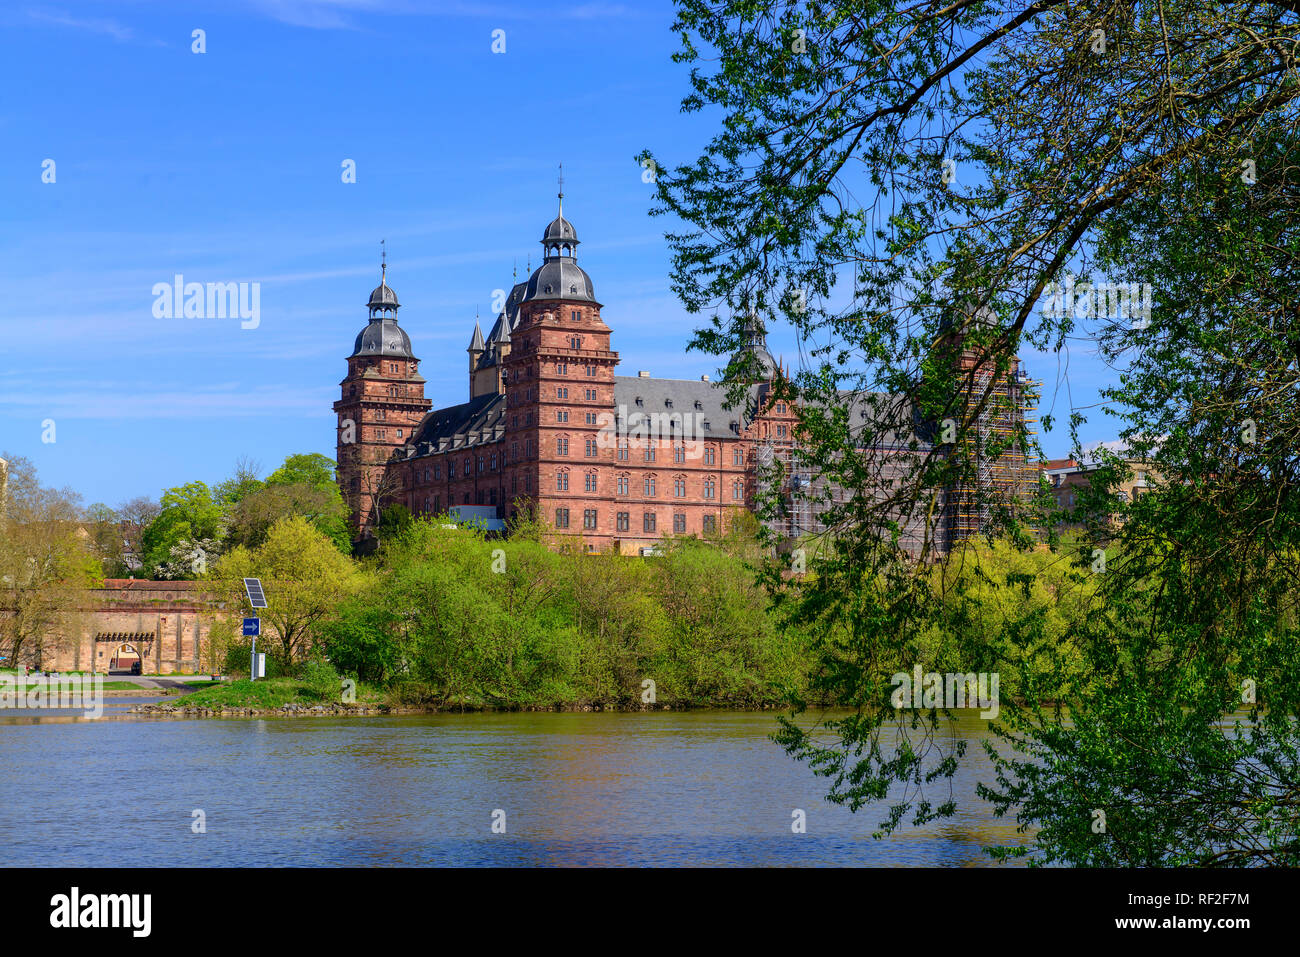 Germany, Bavaria, Franconia, Lower Franconia, Aschaffenburg, Schloss Johannisburg at Main river Stock Photo